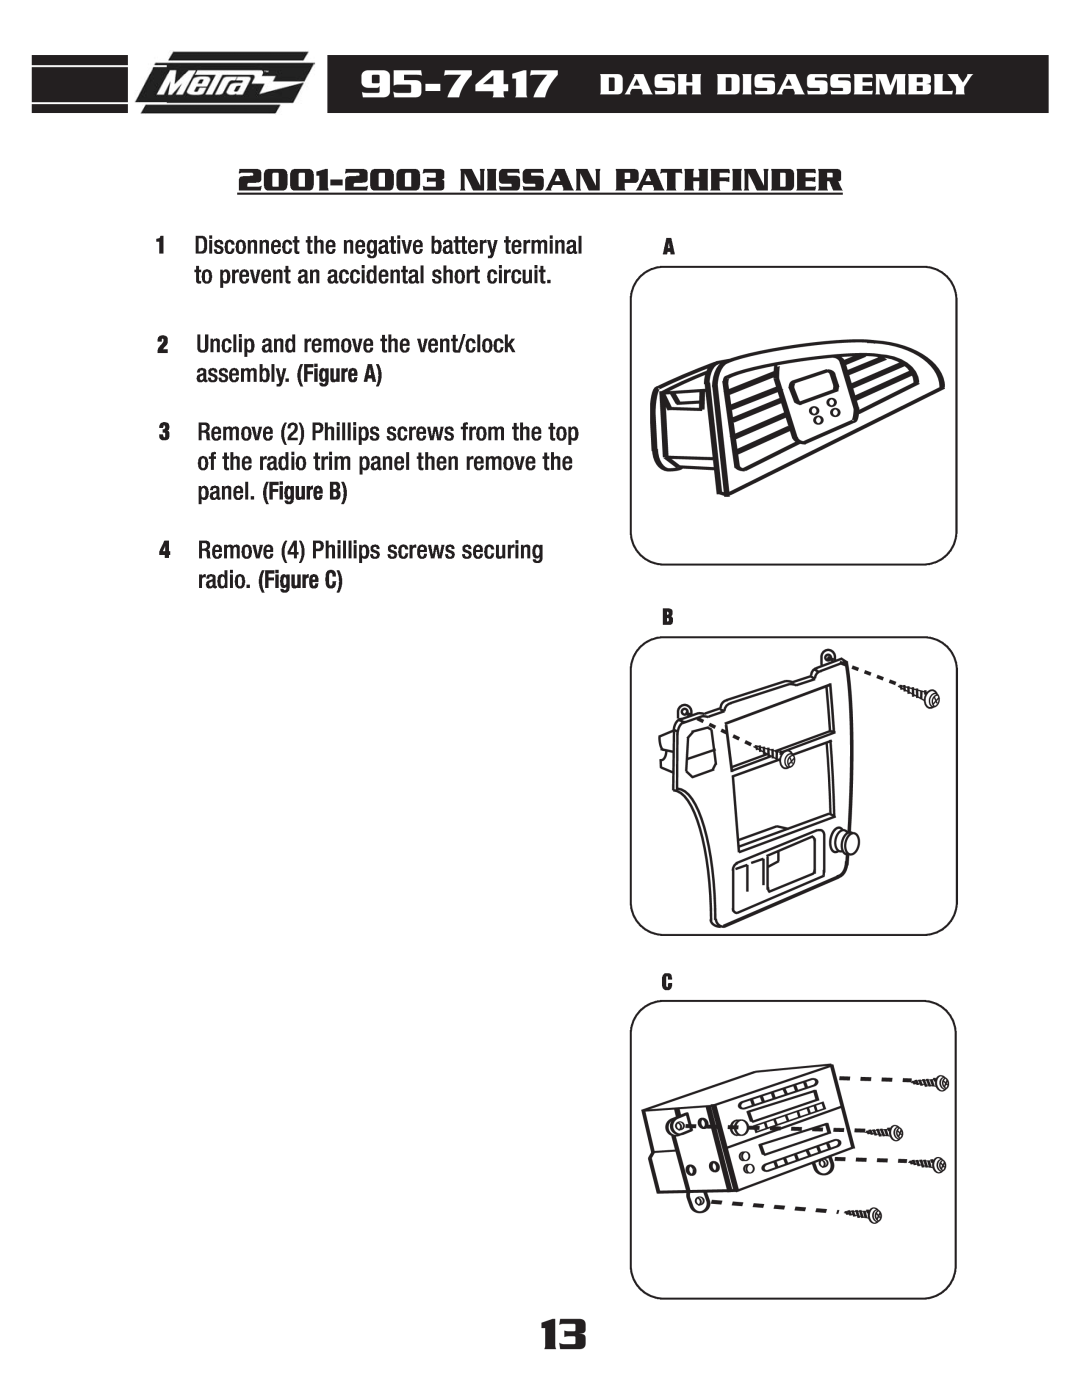 Metra Electronics 95-7417 installation instructions 2001-2003NISSAN PATHFINDER, Dash Disassembly 